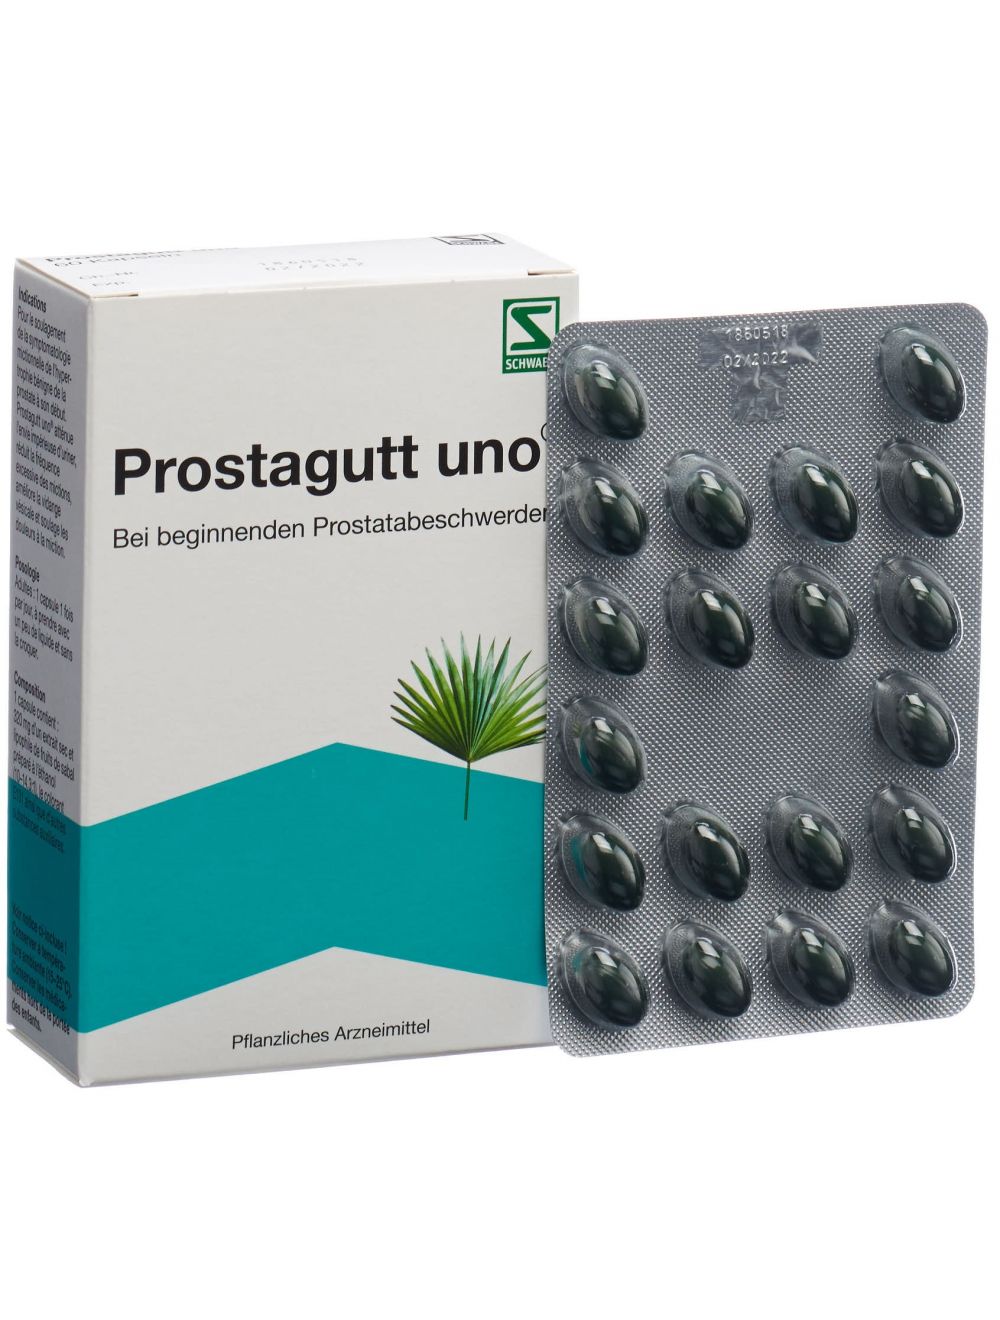 médicaments prostate sans ordonnance en pharmacie